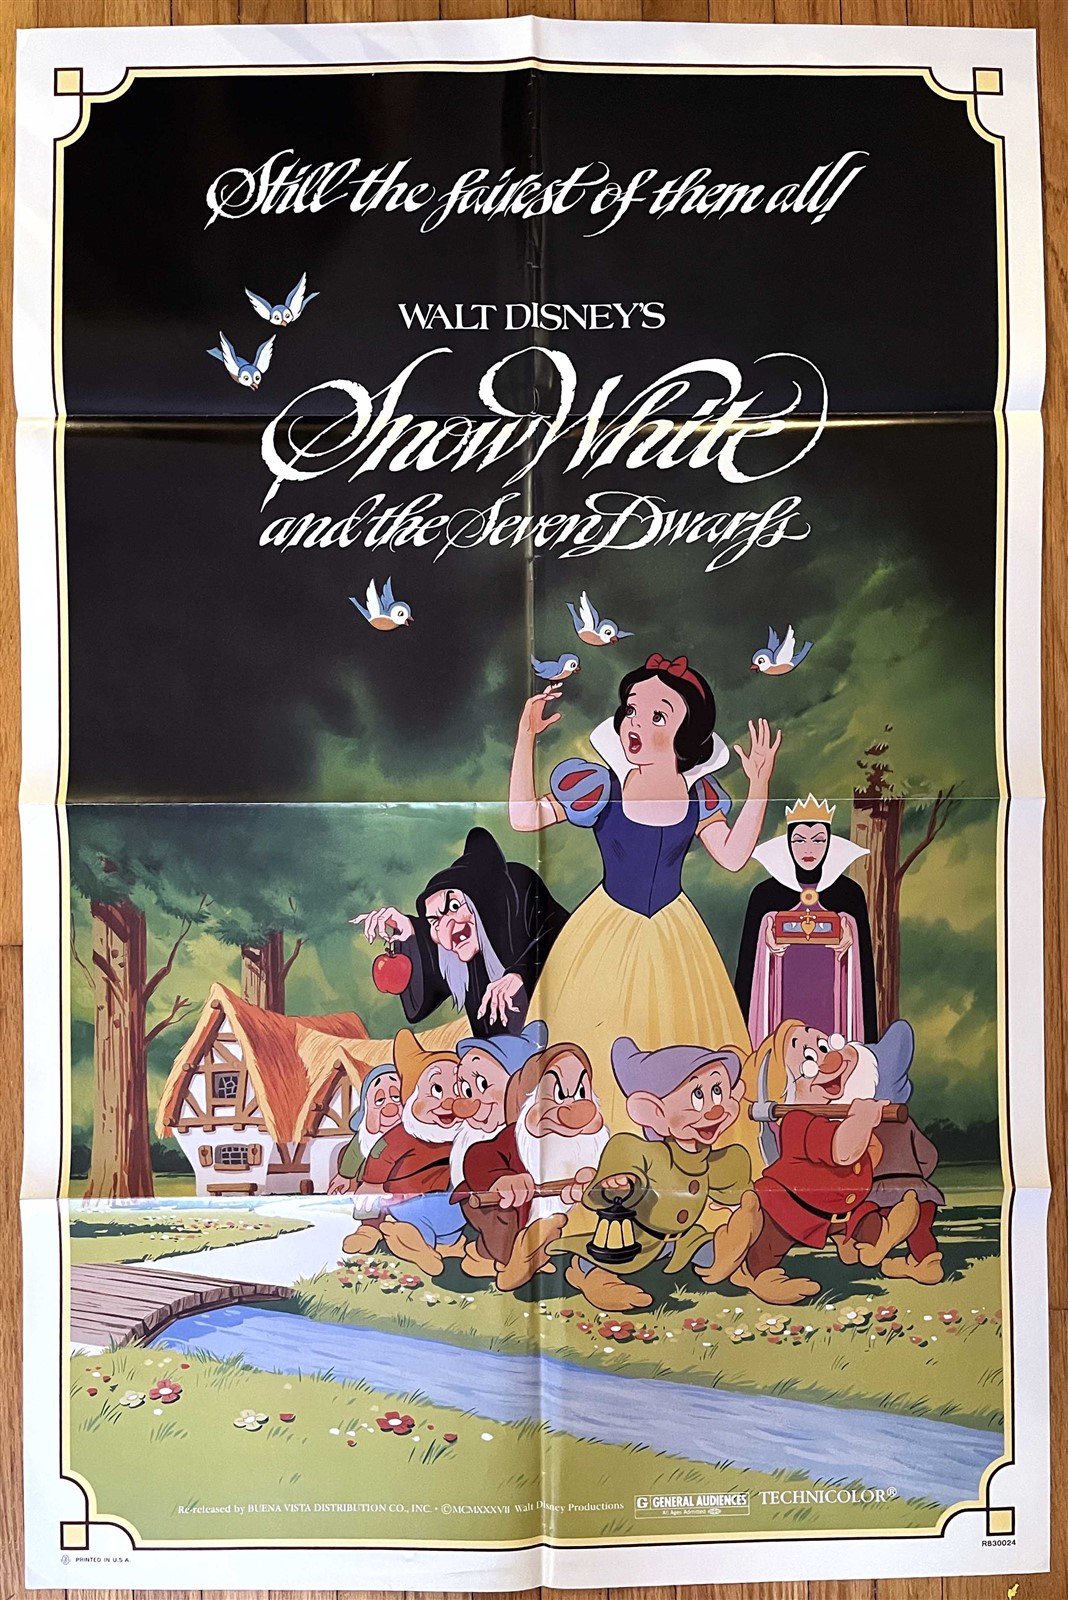 Walt Disney SNOW WHITE AND THE SEVEN DWARFS movie poster 1983 ORIGINAL 27x41